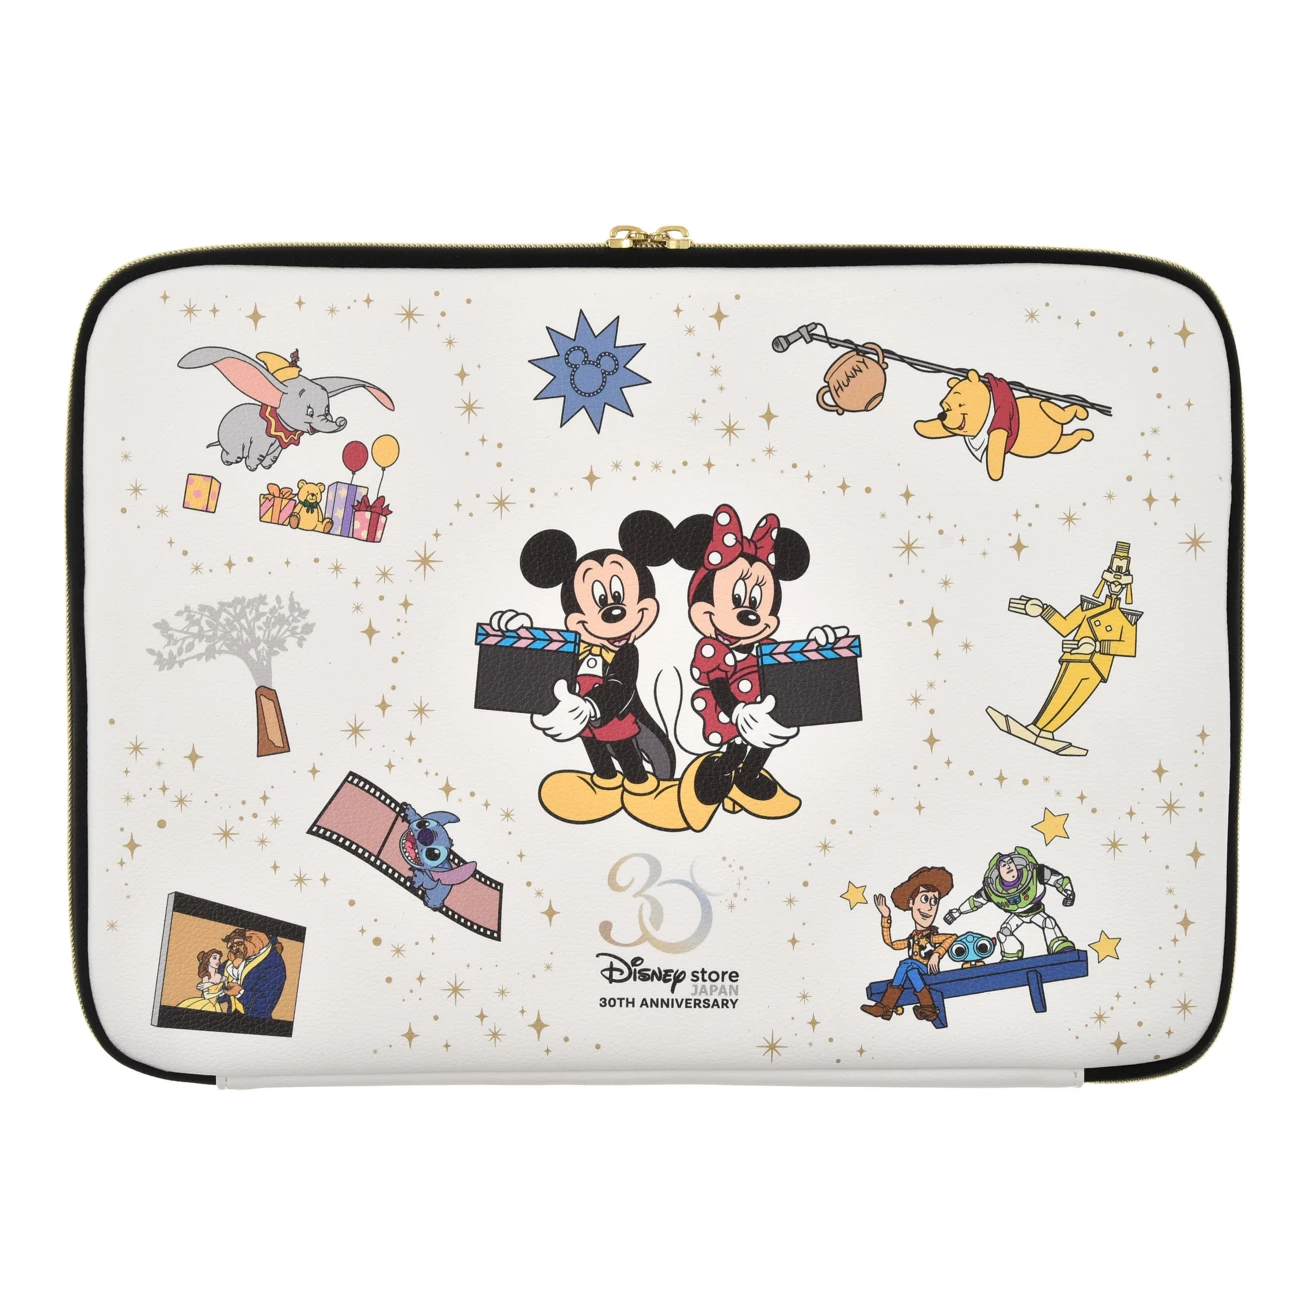 SDJ - Disney Store Japan 30TH Anniversary - Laptop case